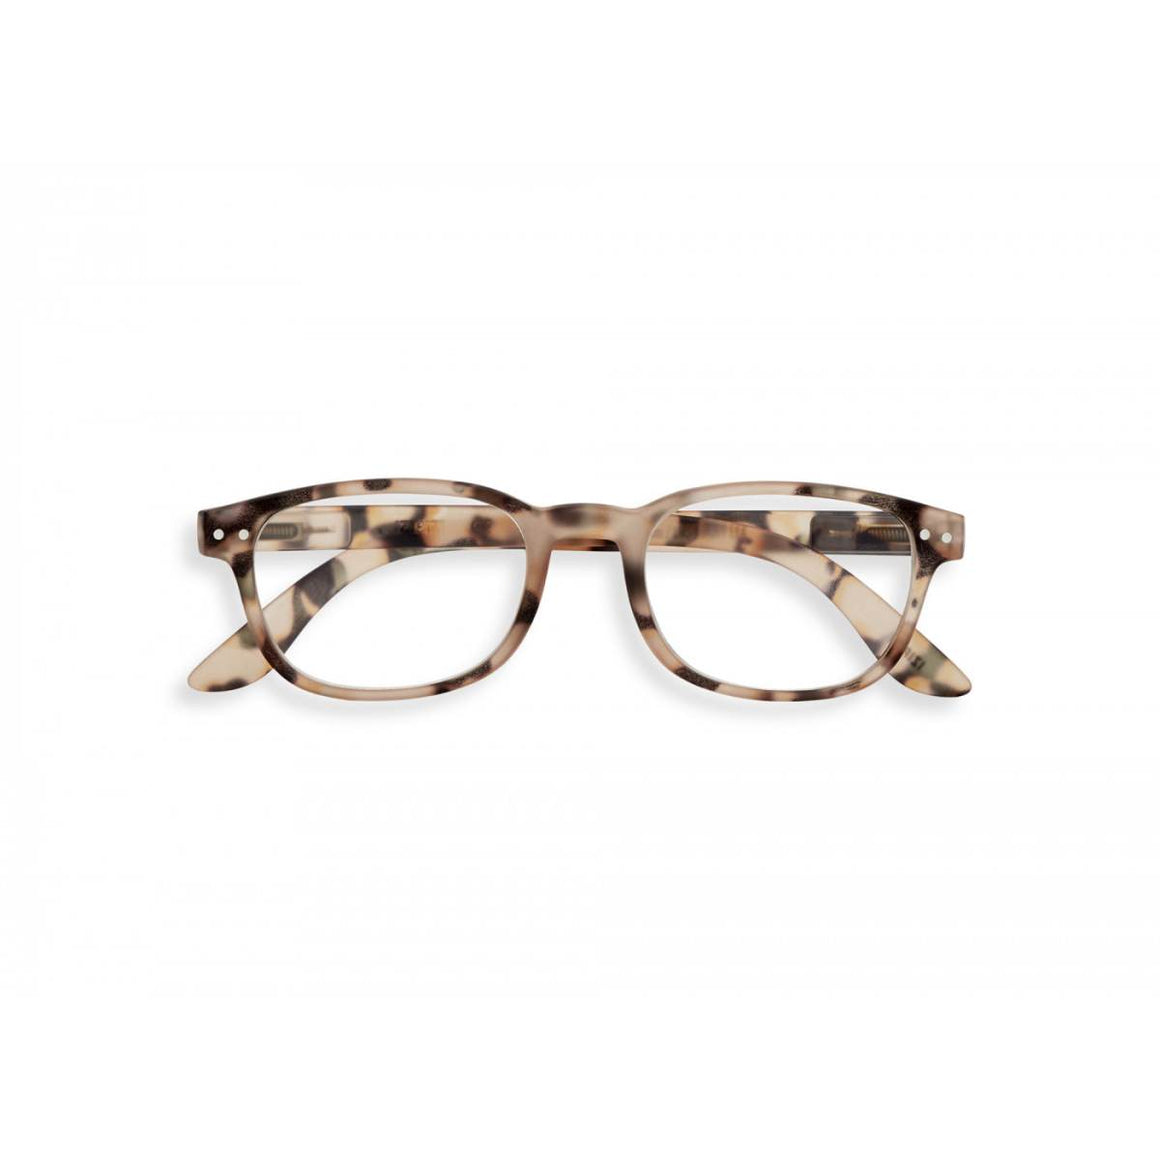 A pair of magnifying reading glasses. The frames are an elegant, classic, rectangular shape in a mottled light tortoise shell finish.